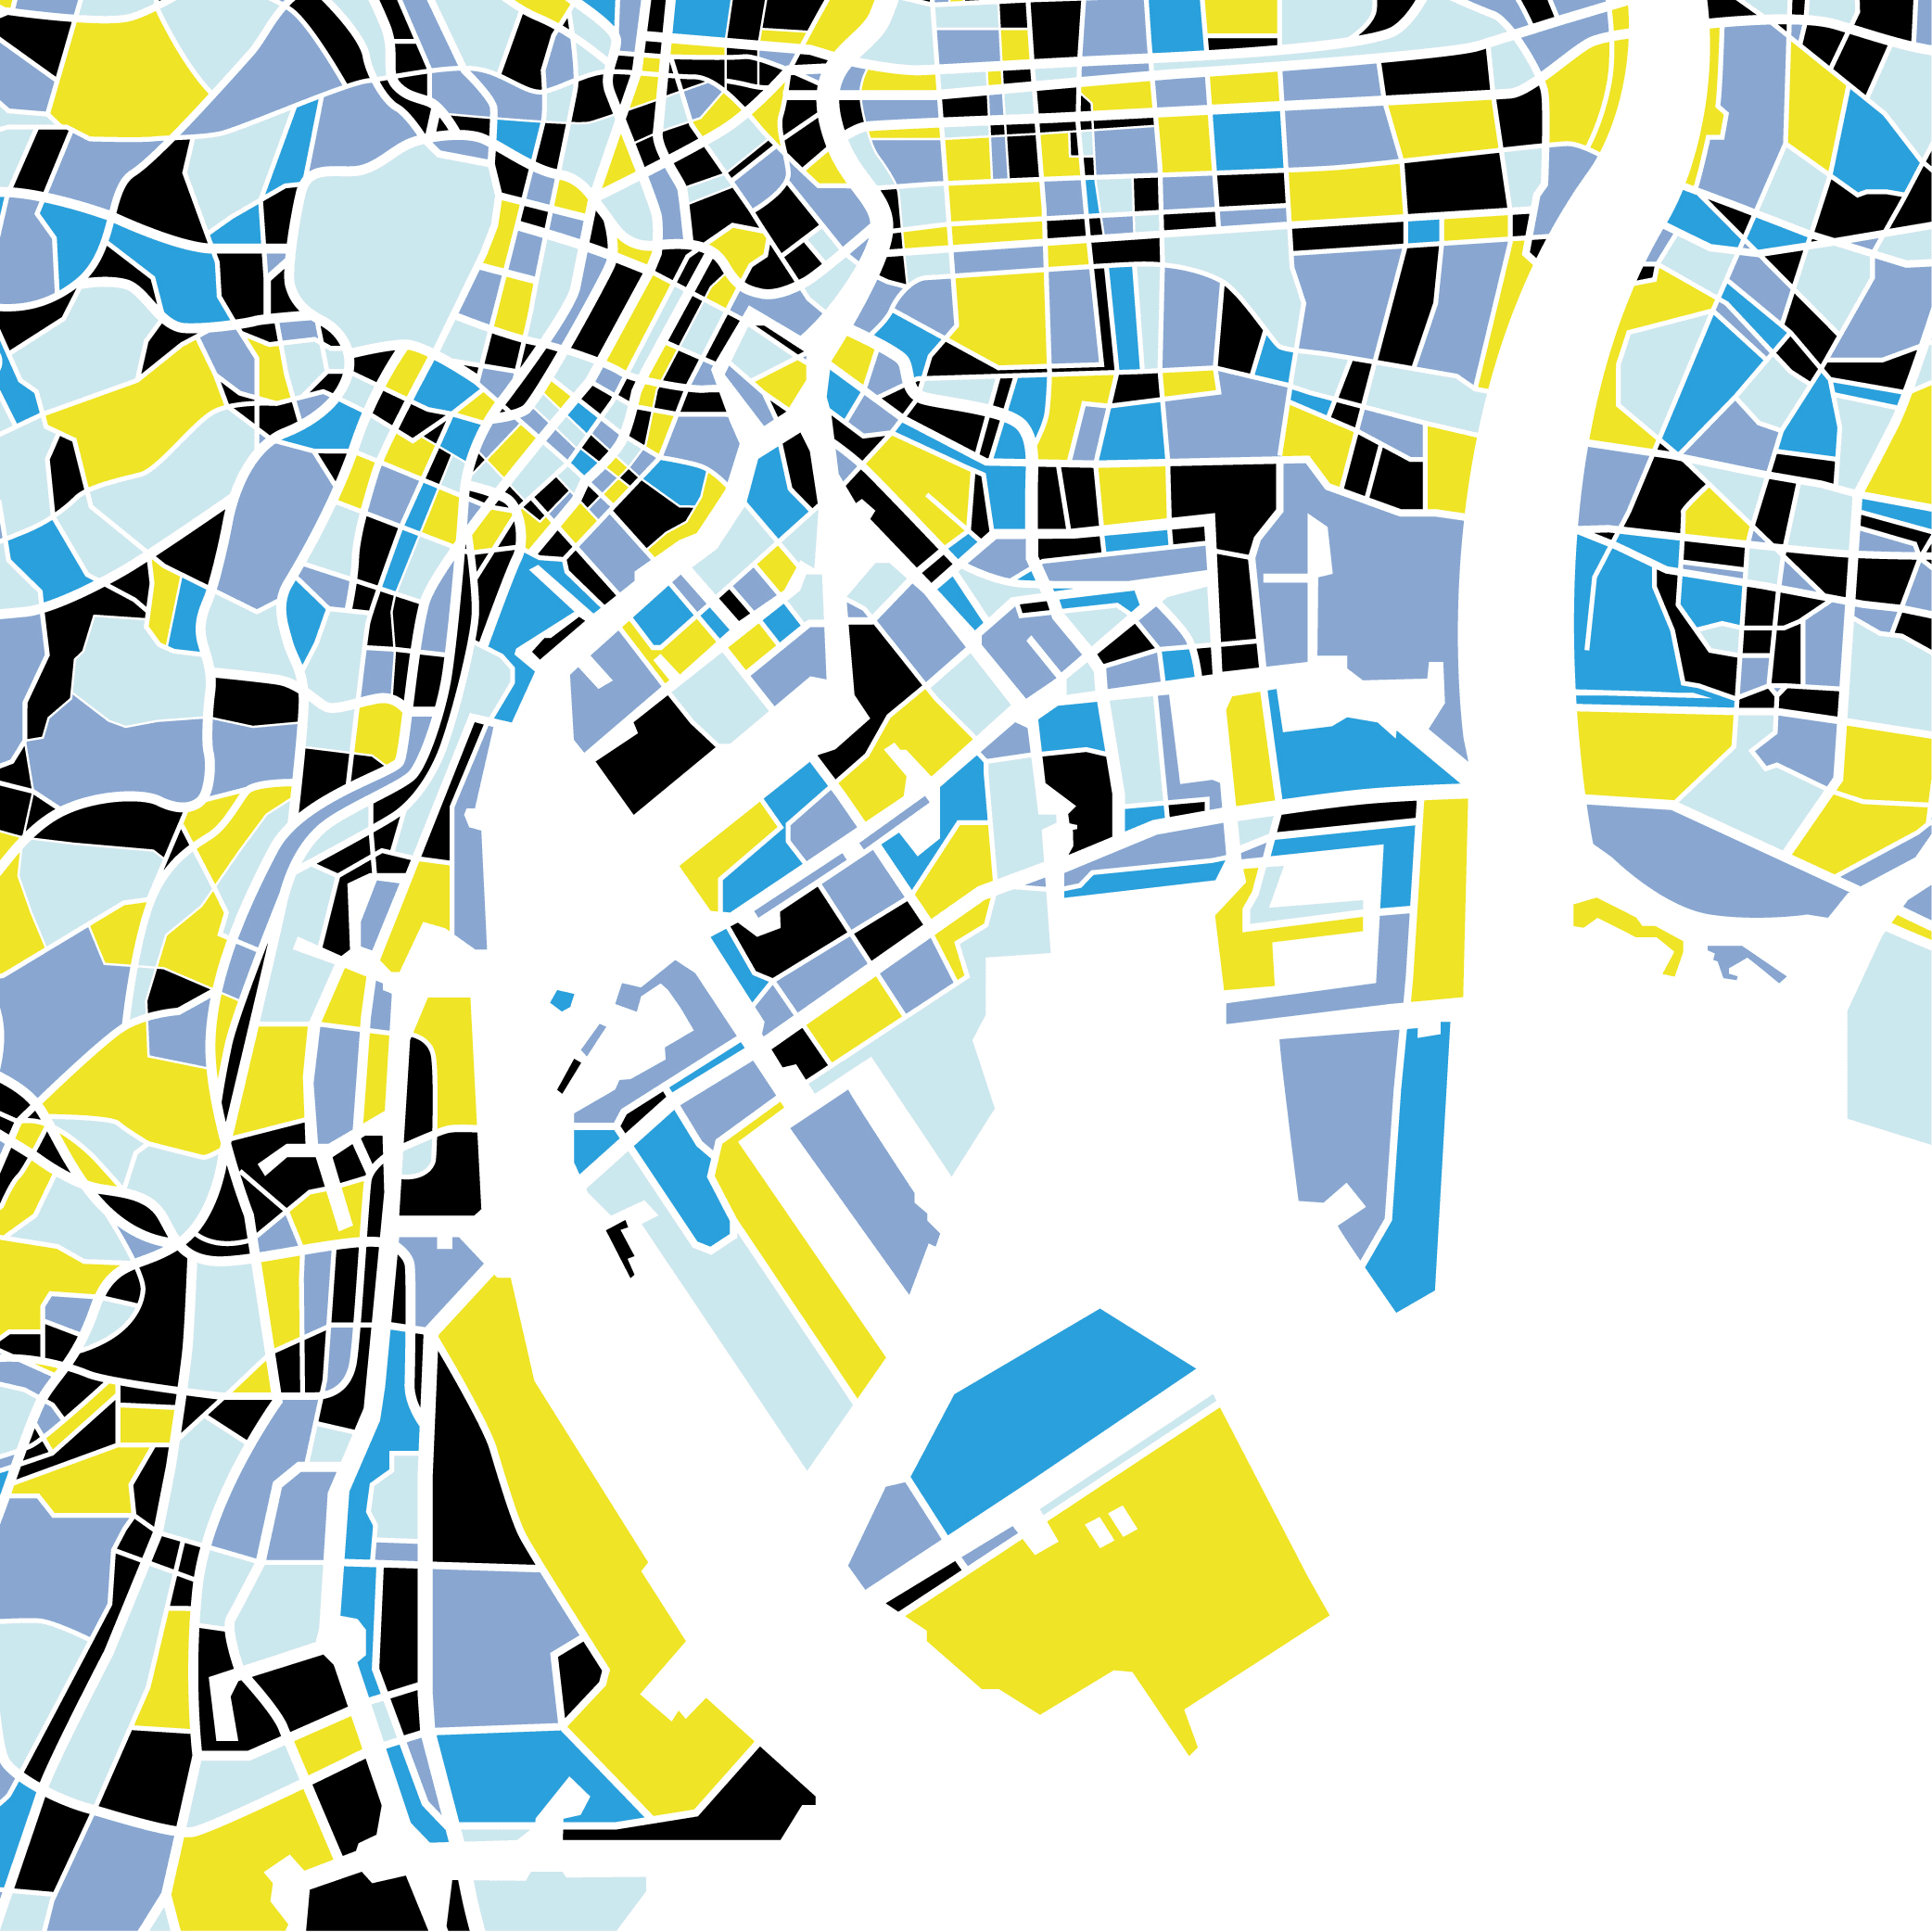 MapPalette #002 Tokyo